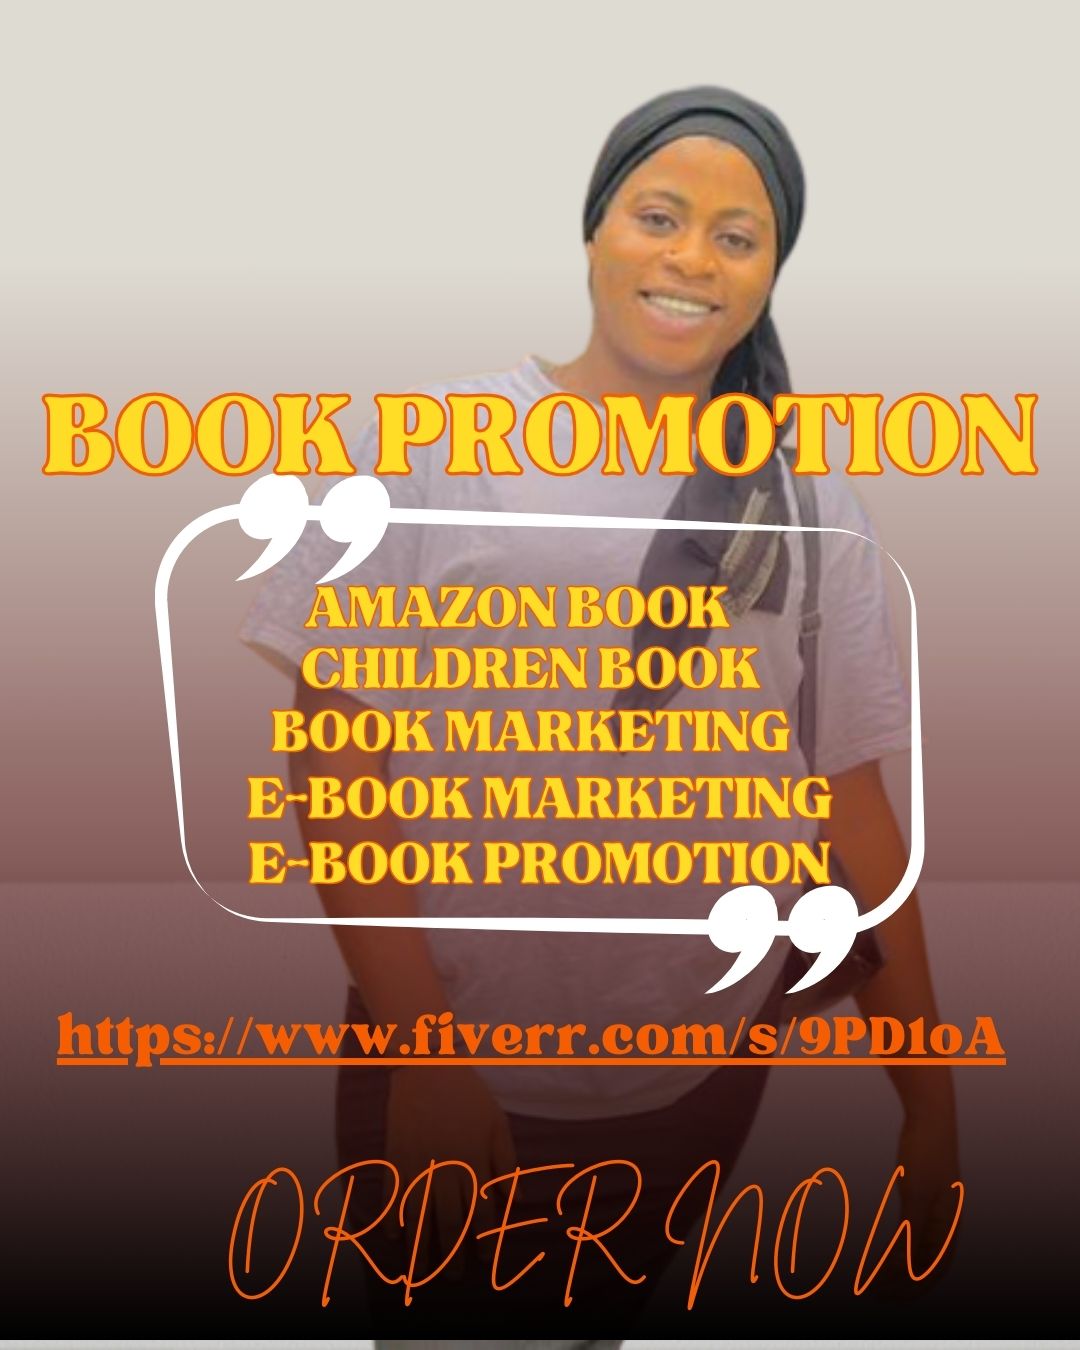 I will do organic ebook promotion, kindle book marketing